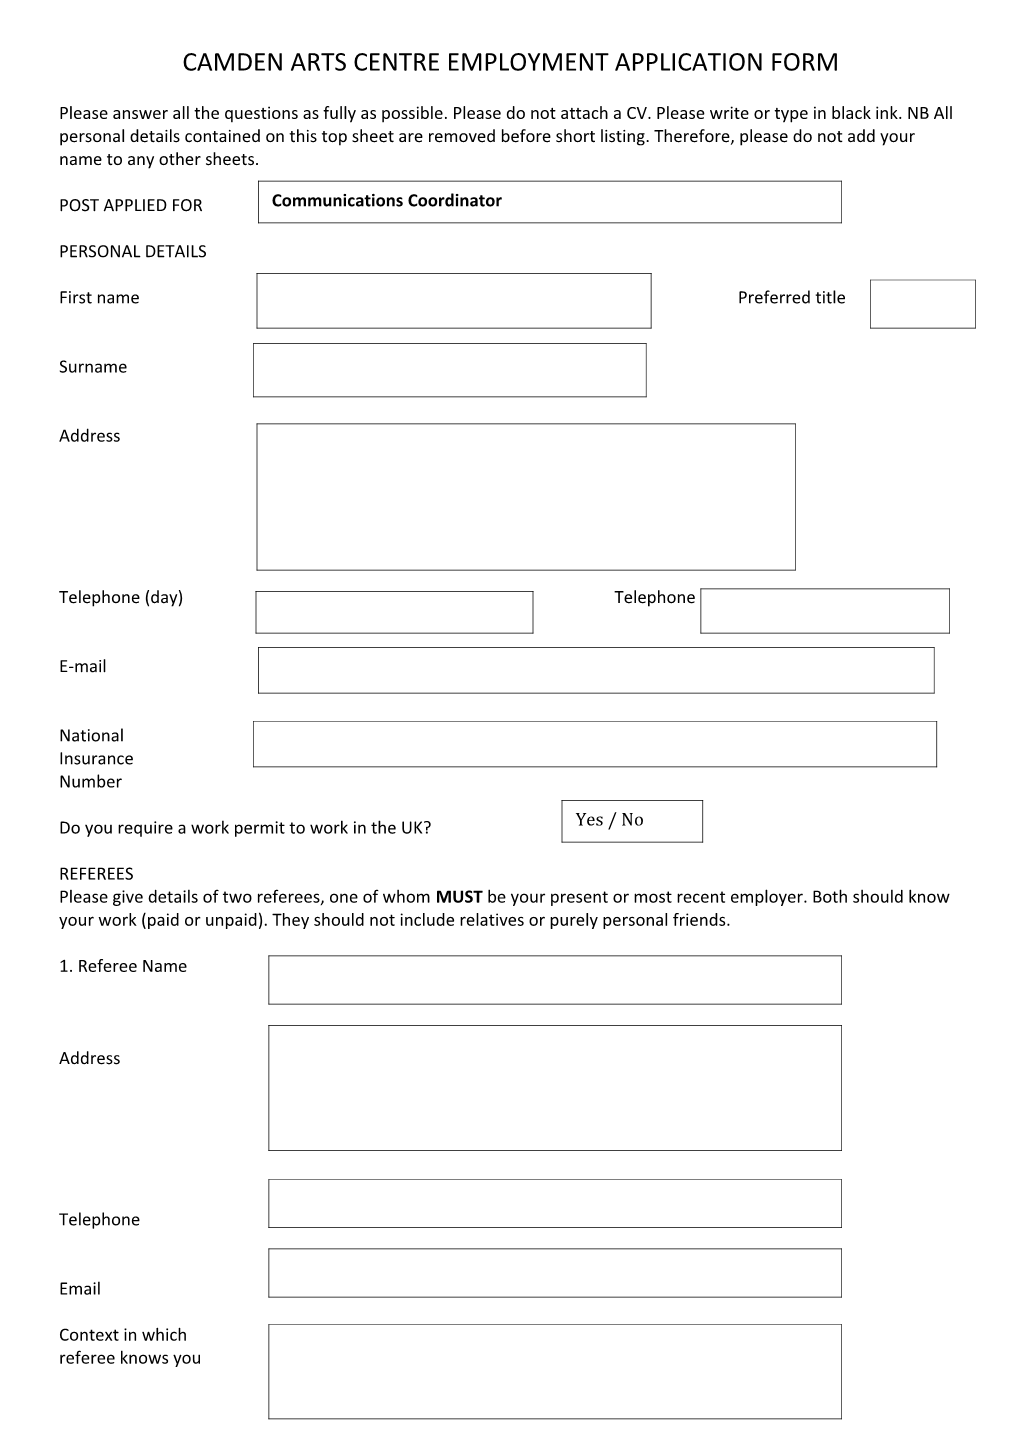 Camden Arts Centreemployment Application Form